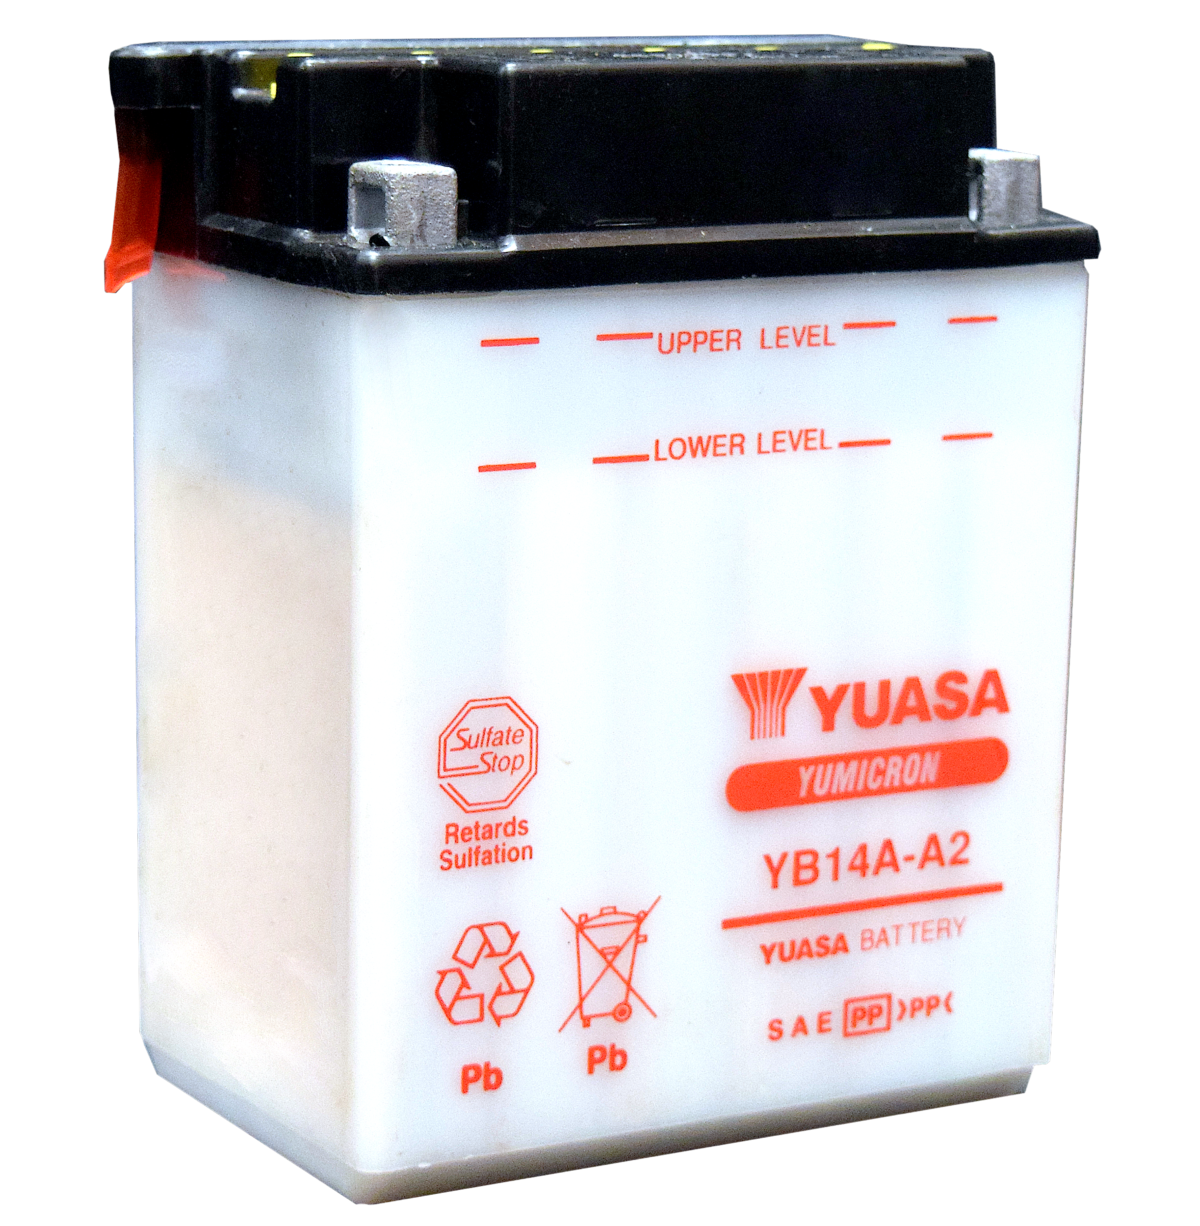 Yuasa YB14A-A2 Yumicron battery for motorsports, powersports, and motorcycle